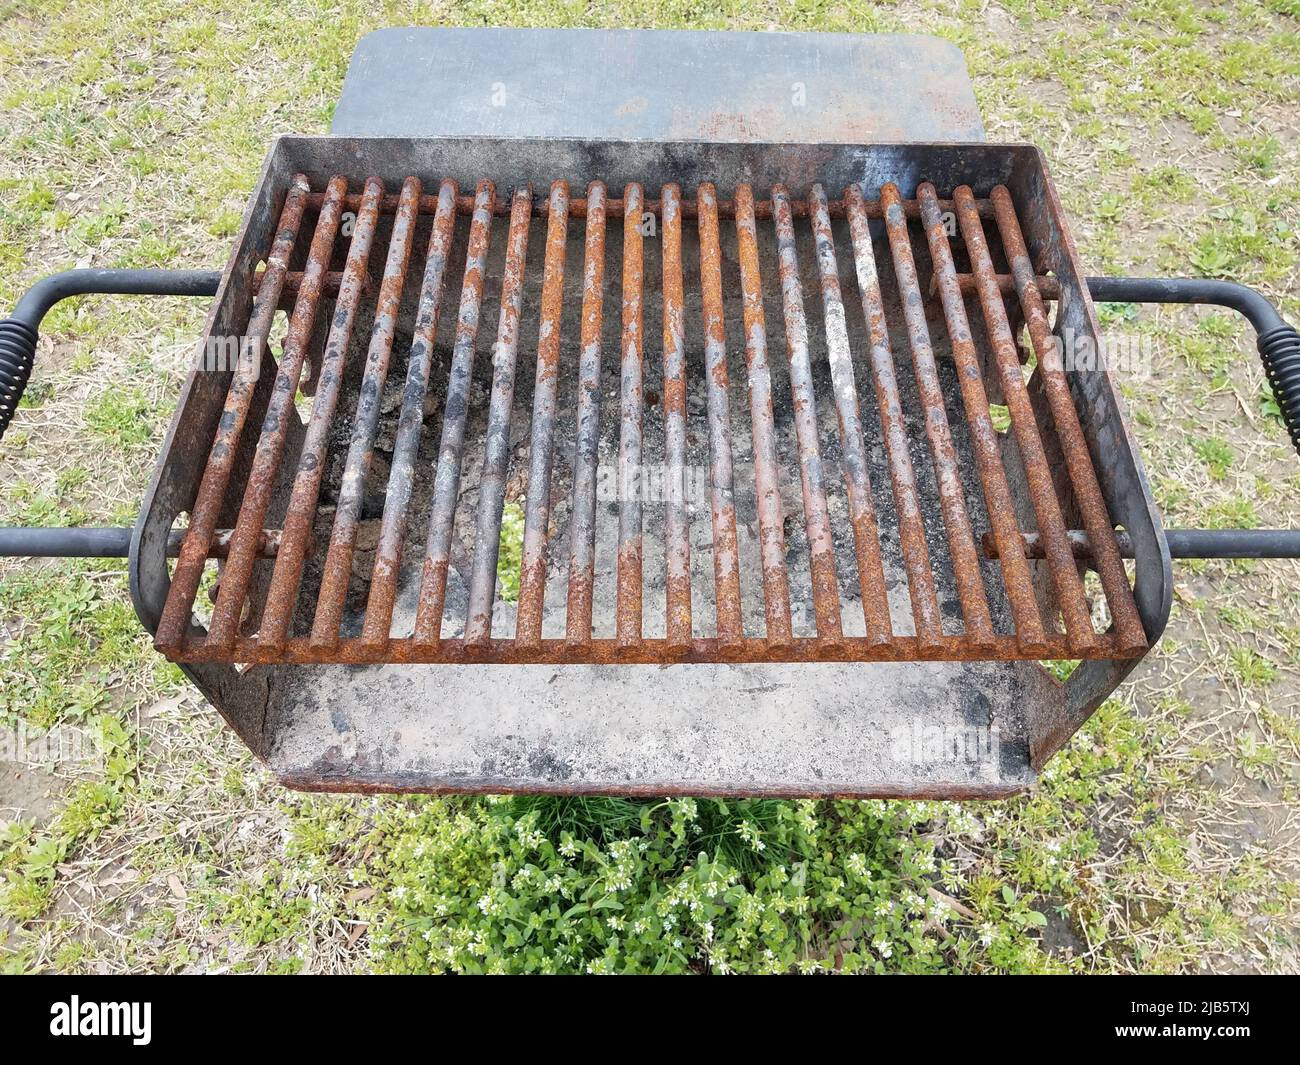 Barbecue grill bars -Fotos und -Bildmaterial in hoher Auflösung – Alamy